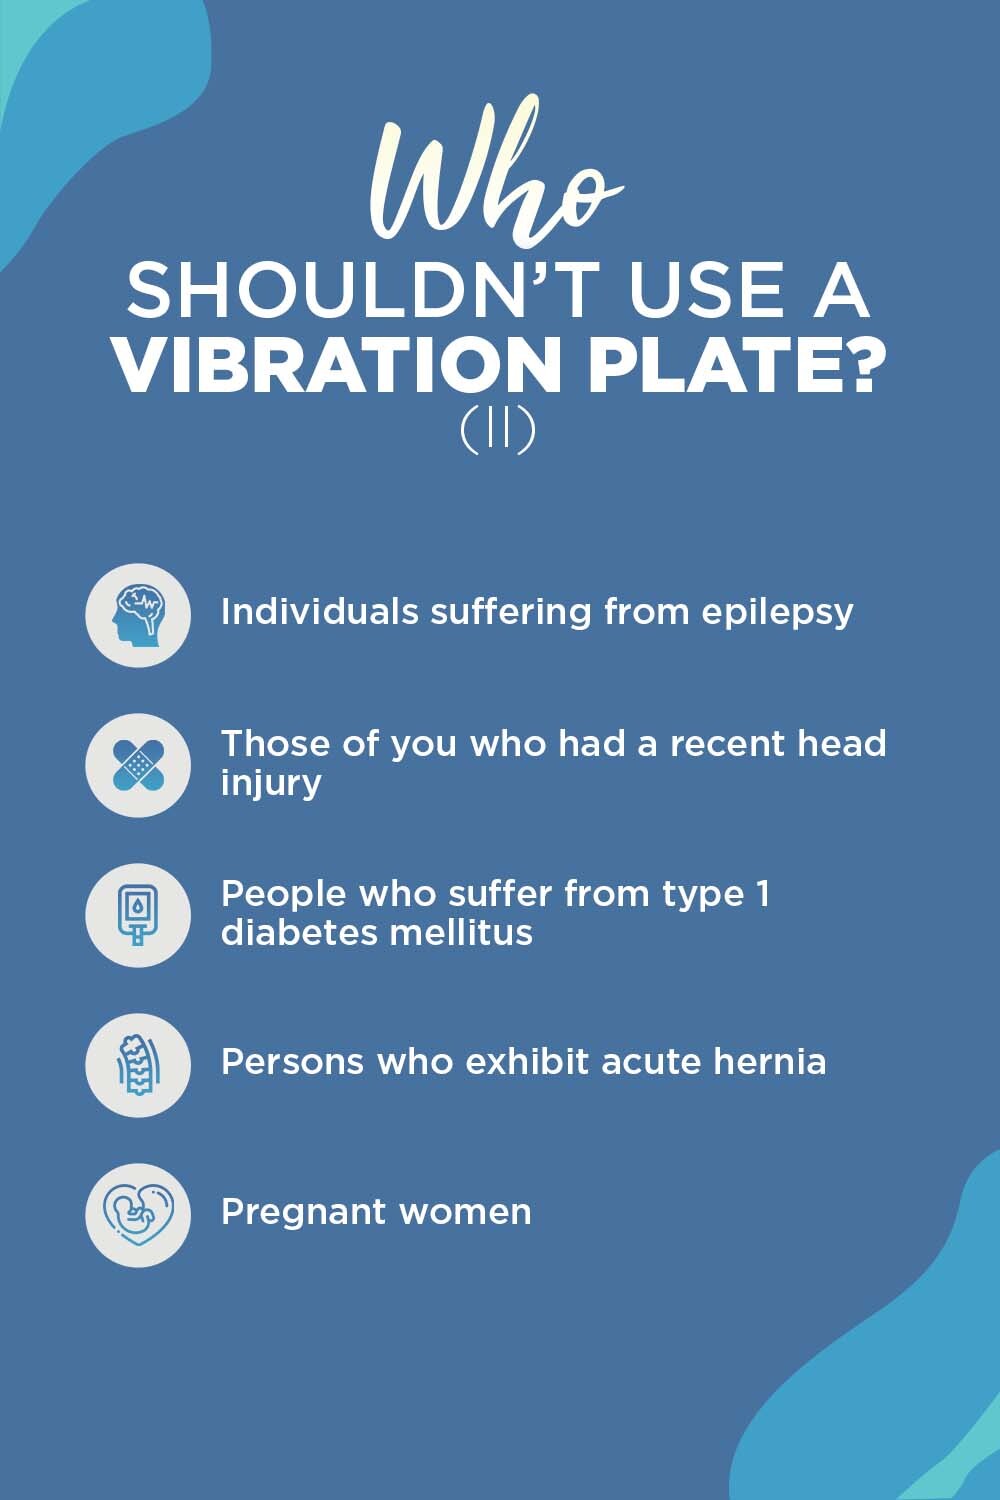 who cannot use vibration plates